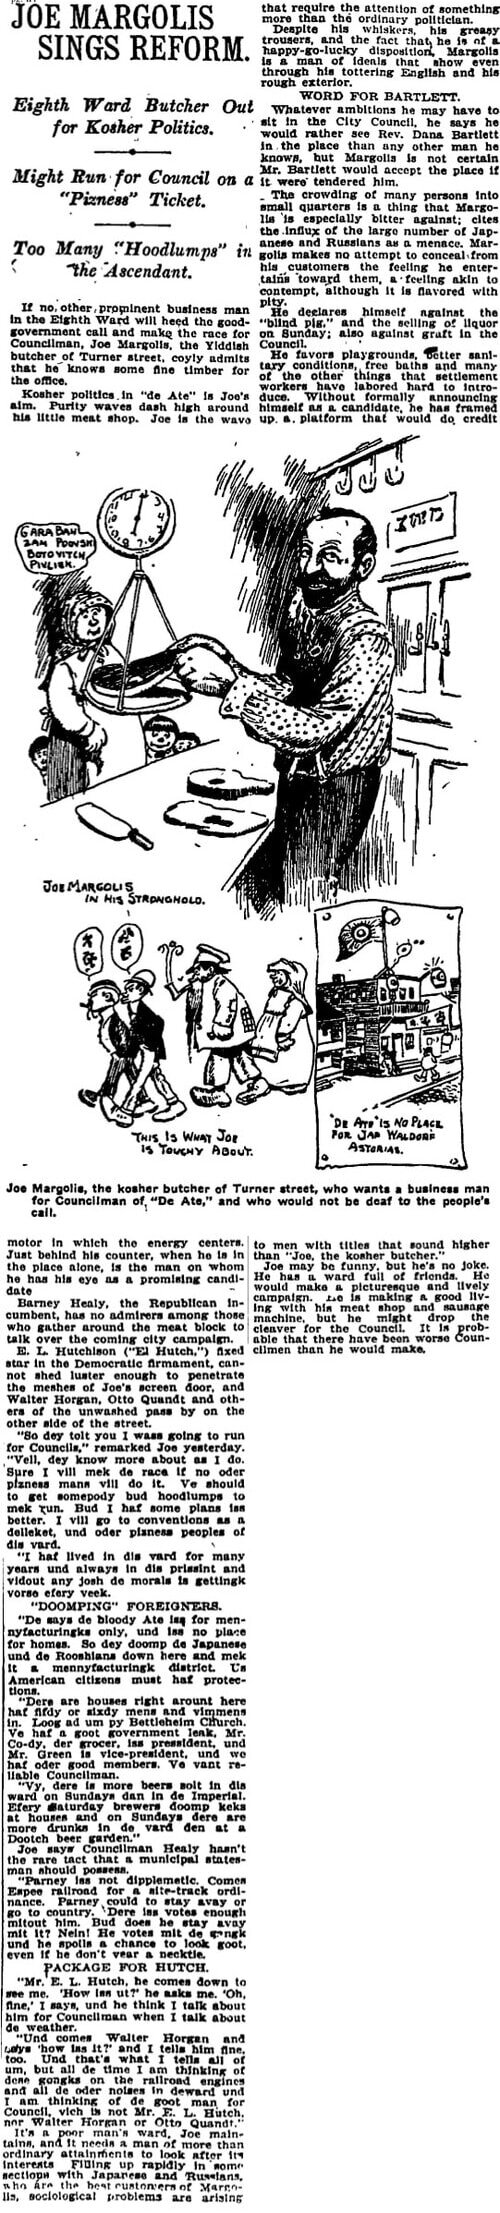 LA-Times-June-23-1906-opt.jpg